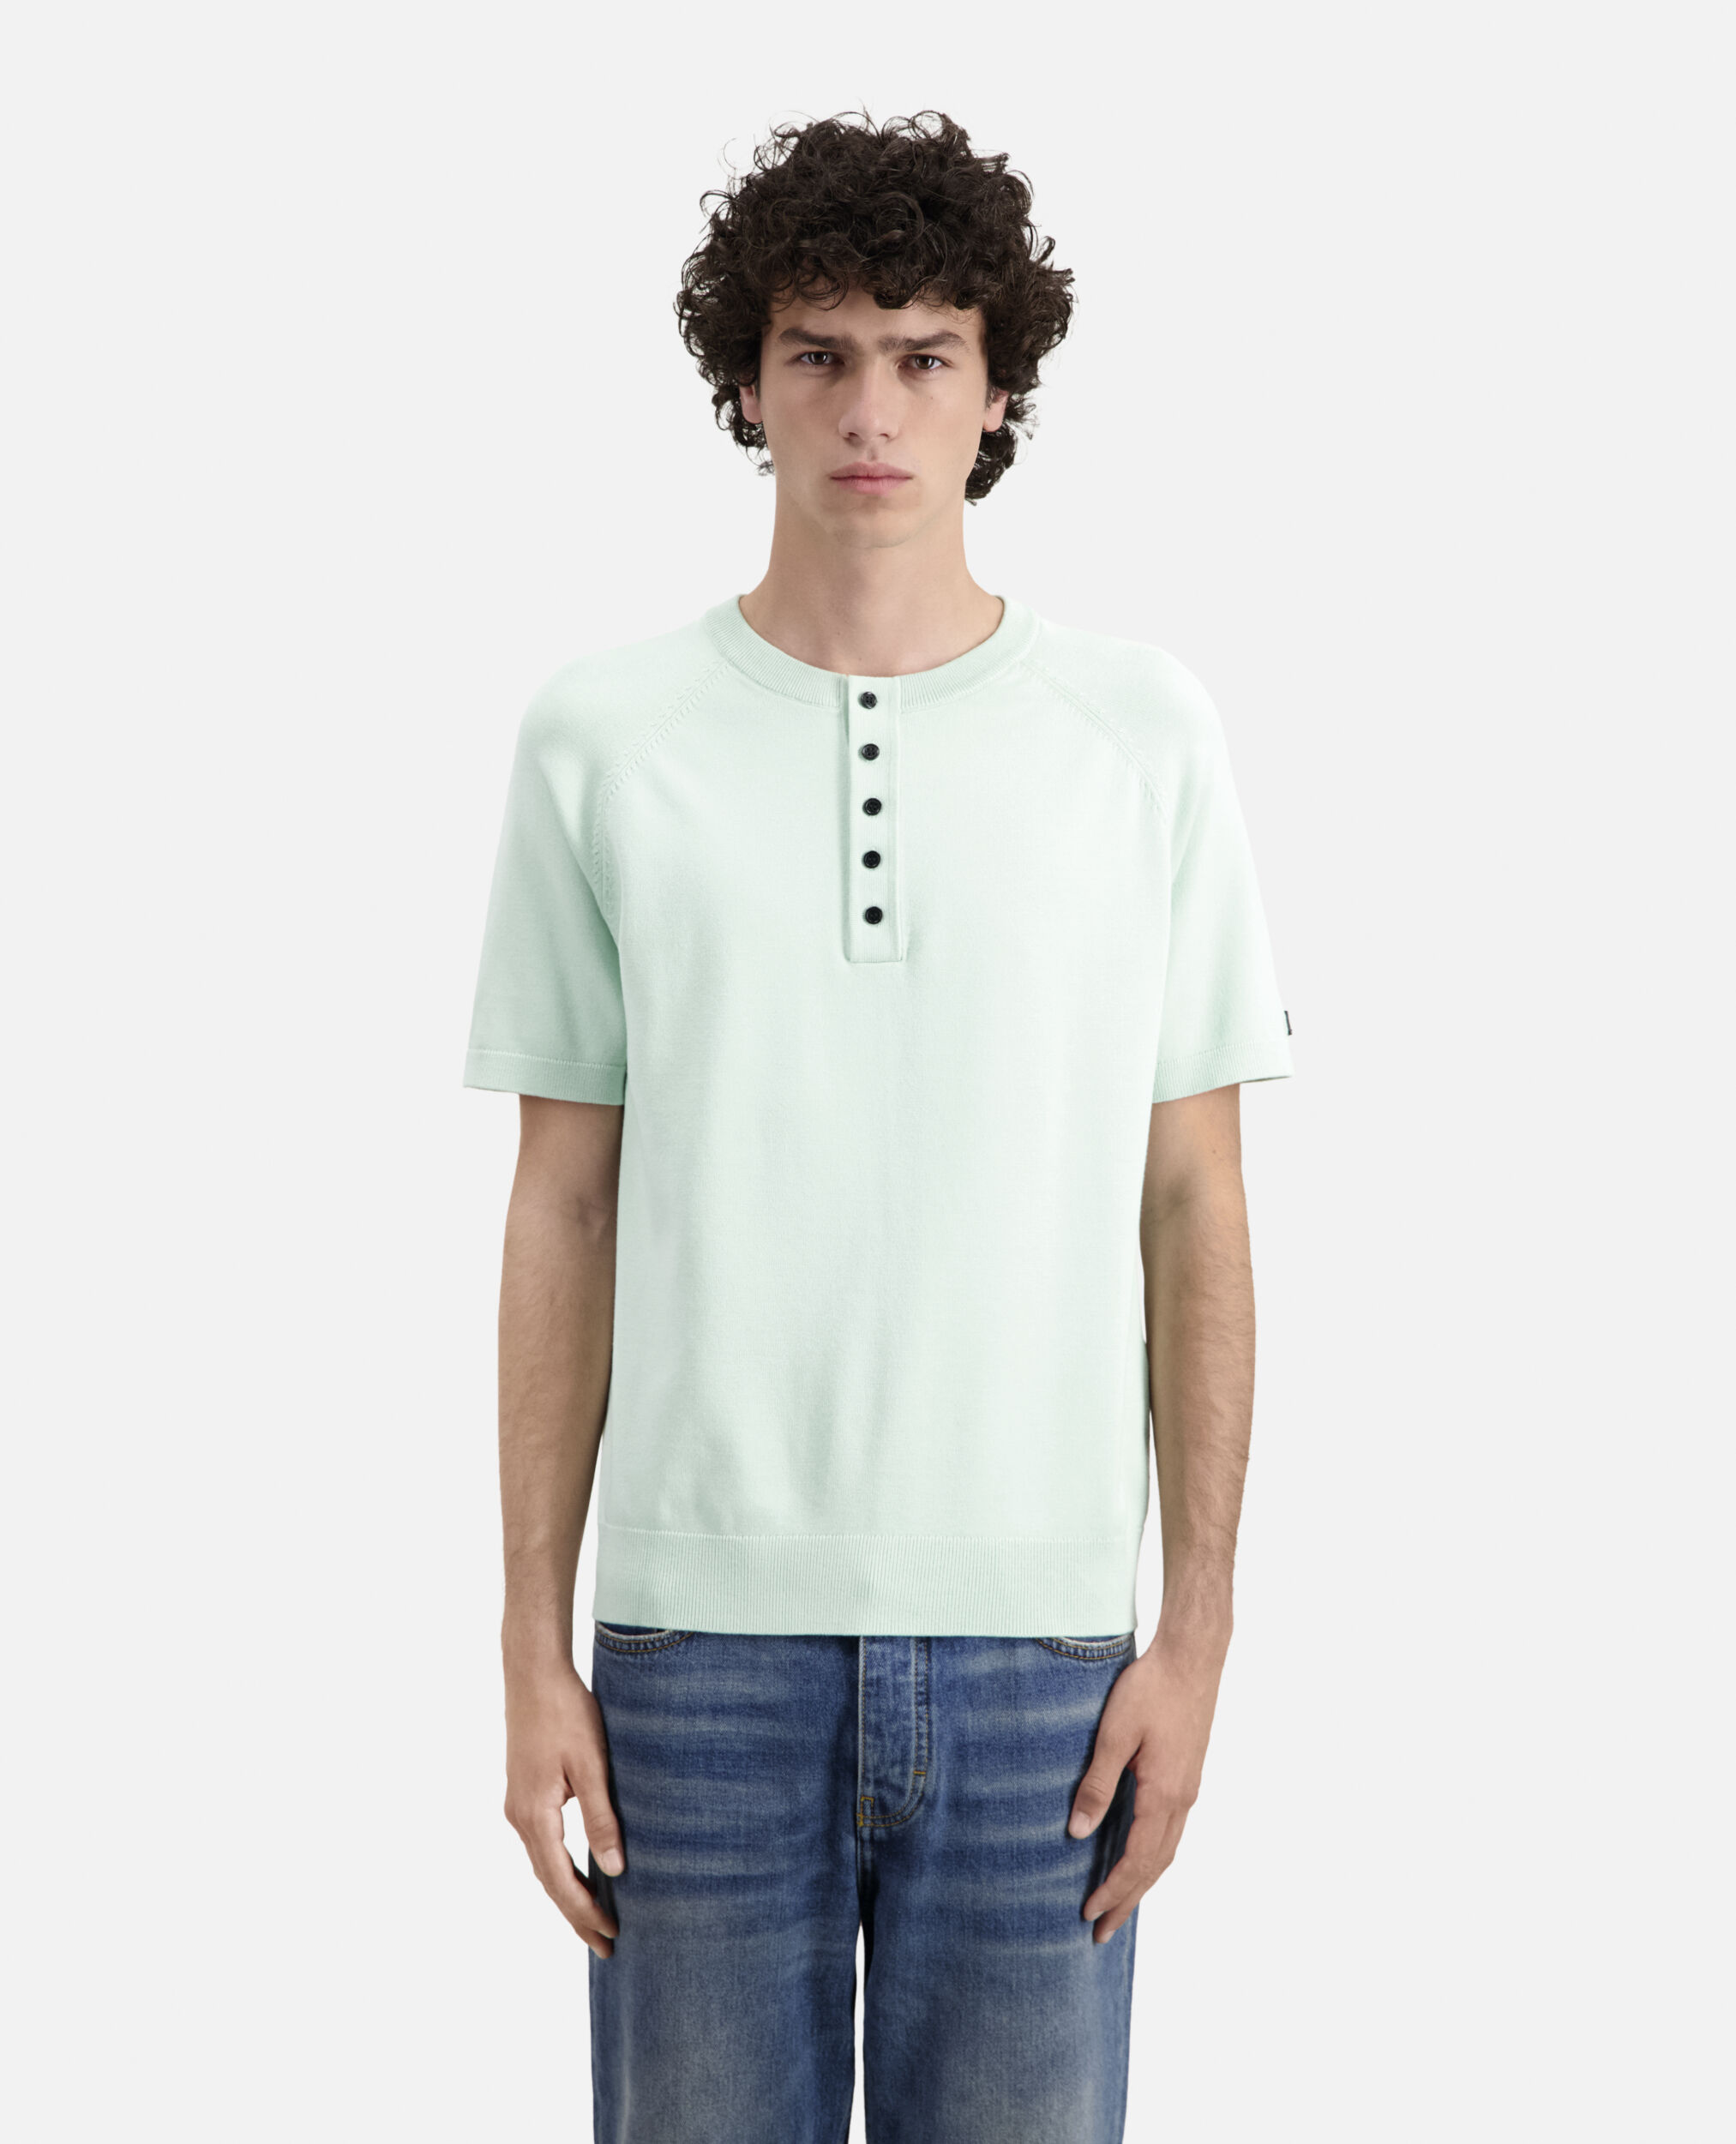 Men's green knit t-shirt, OCEAN, hi-res image number null